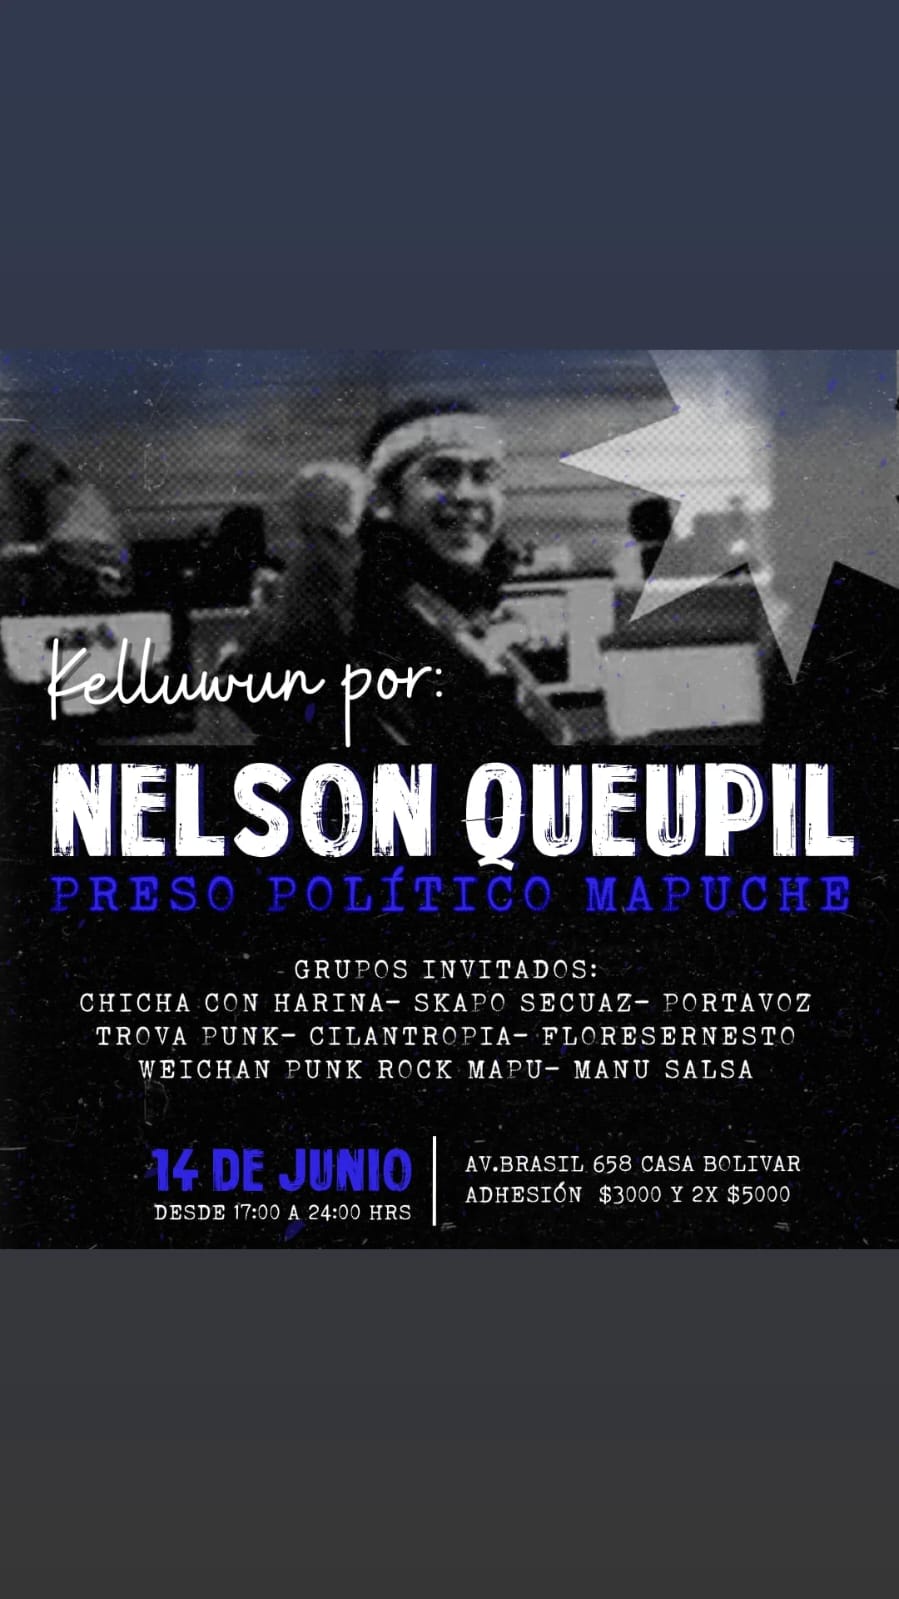 ¨Kelluwun por Nelson Queupil PPM¨